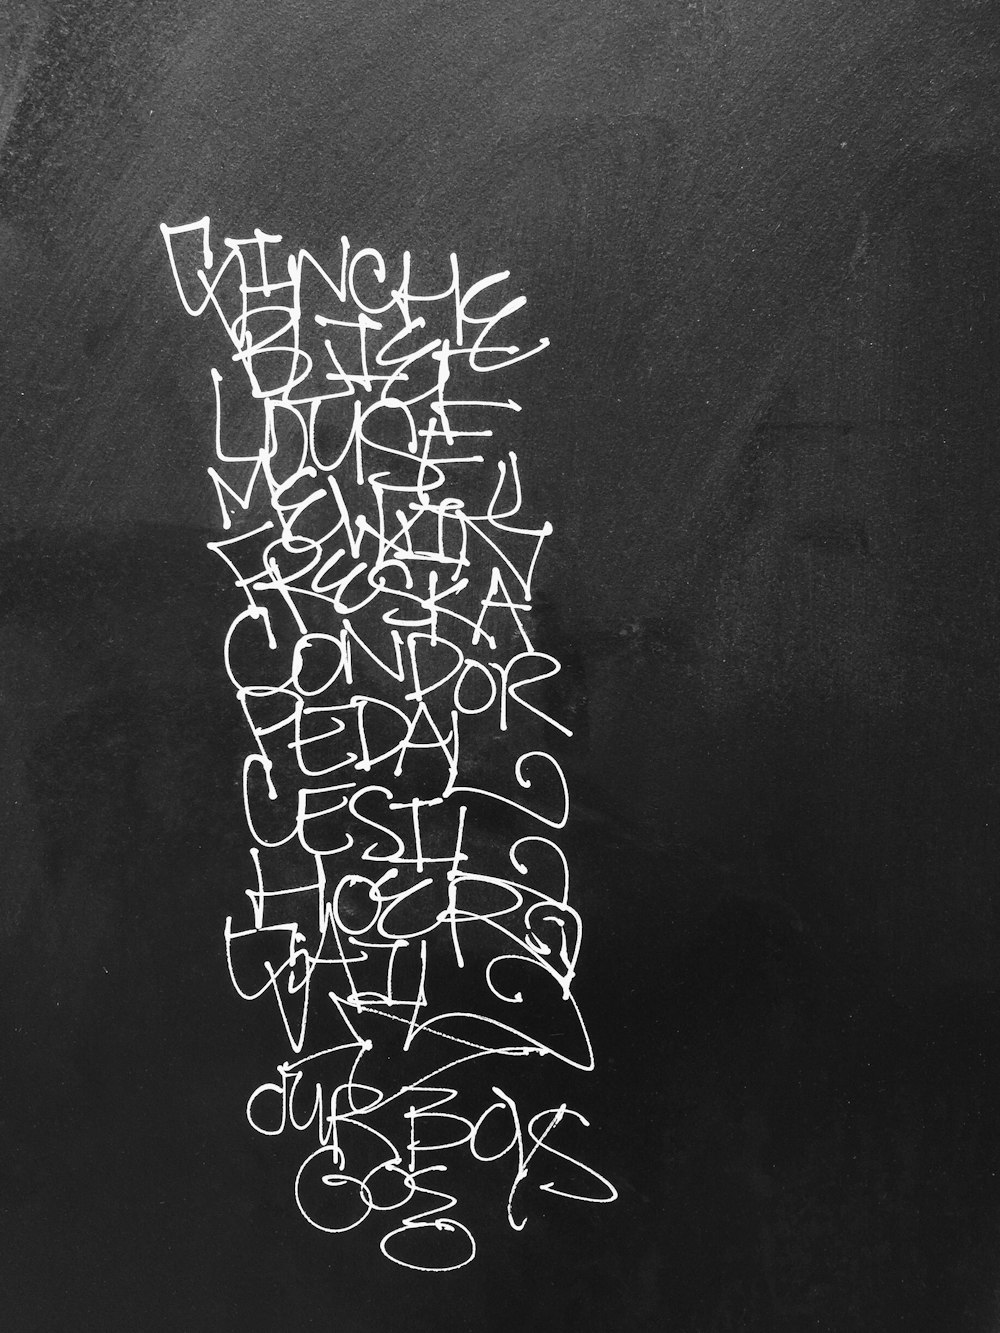 Grafite branco no quadro-negro